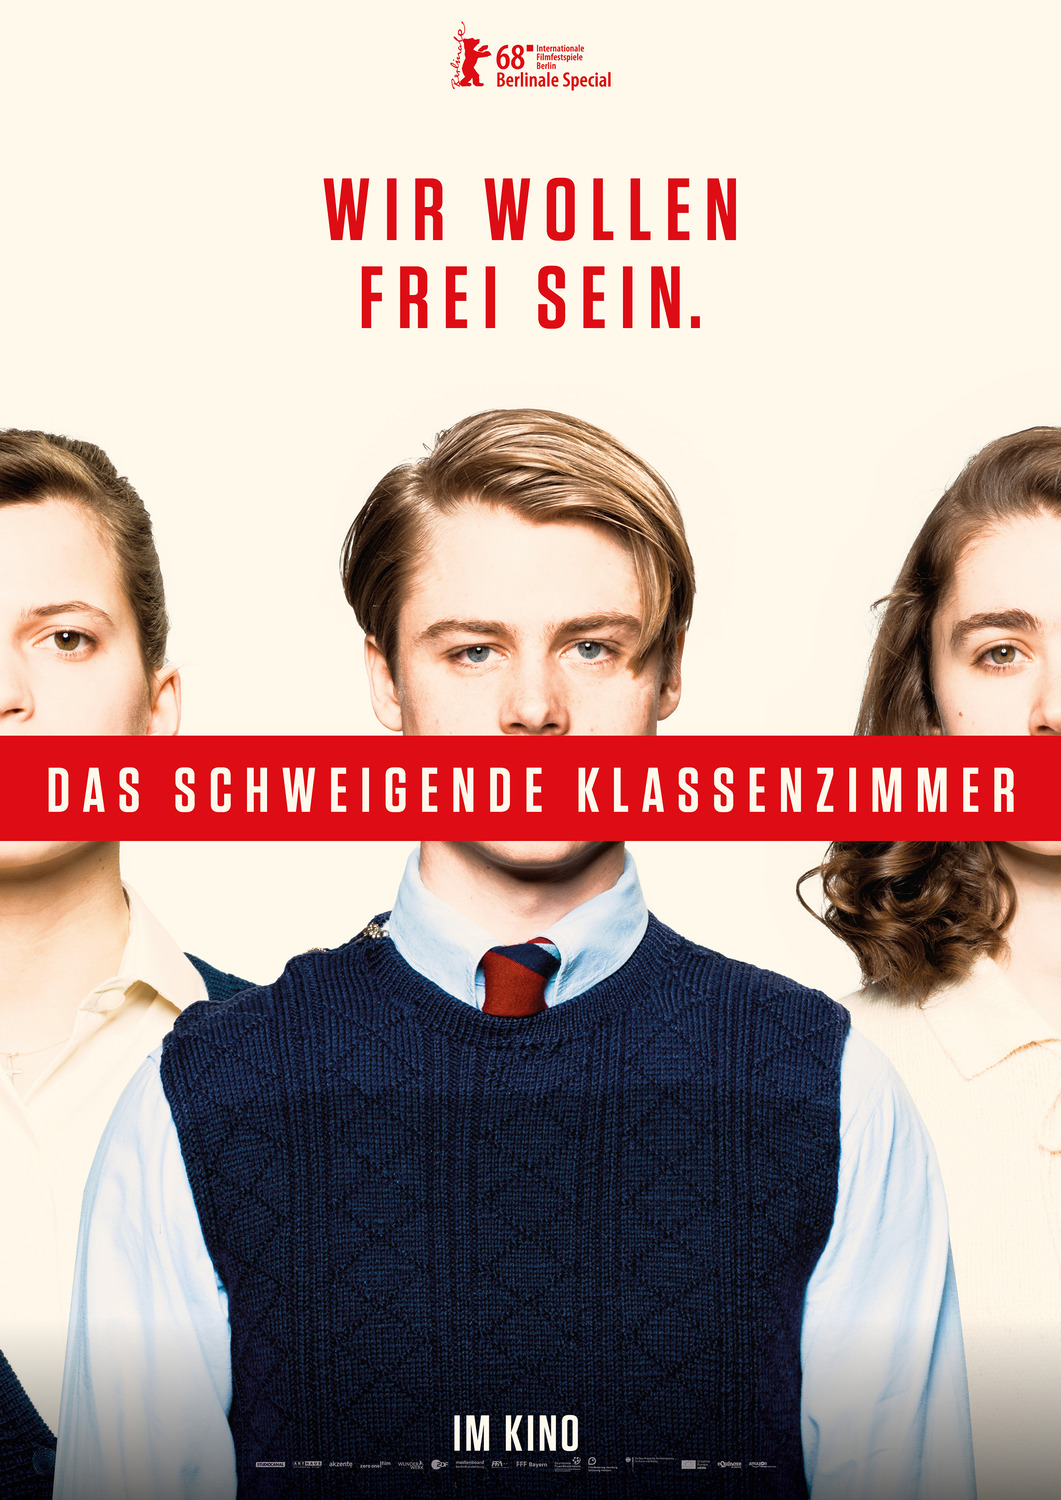 Extra Large Movie Poster Image for Das schweigende Klassenzimmer (#5 of 7)